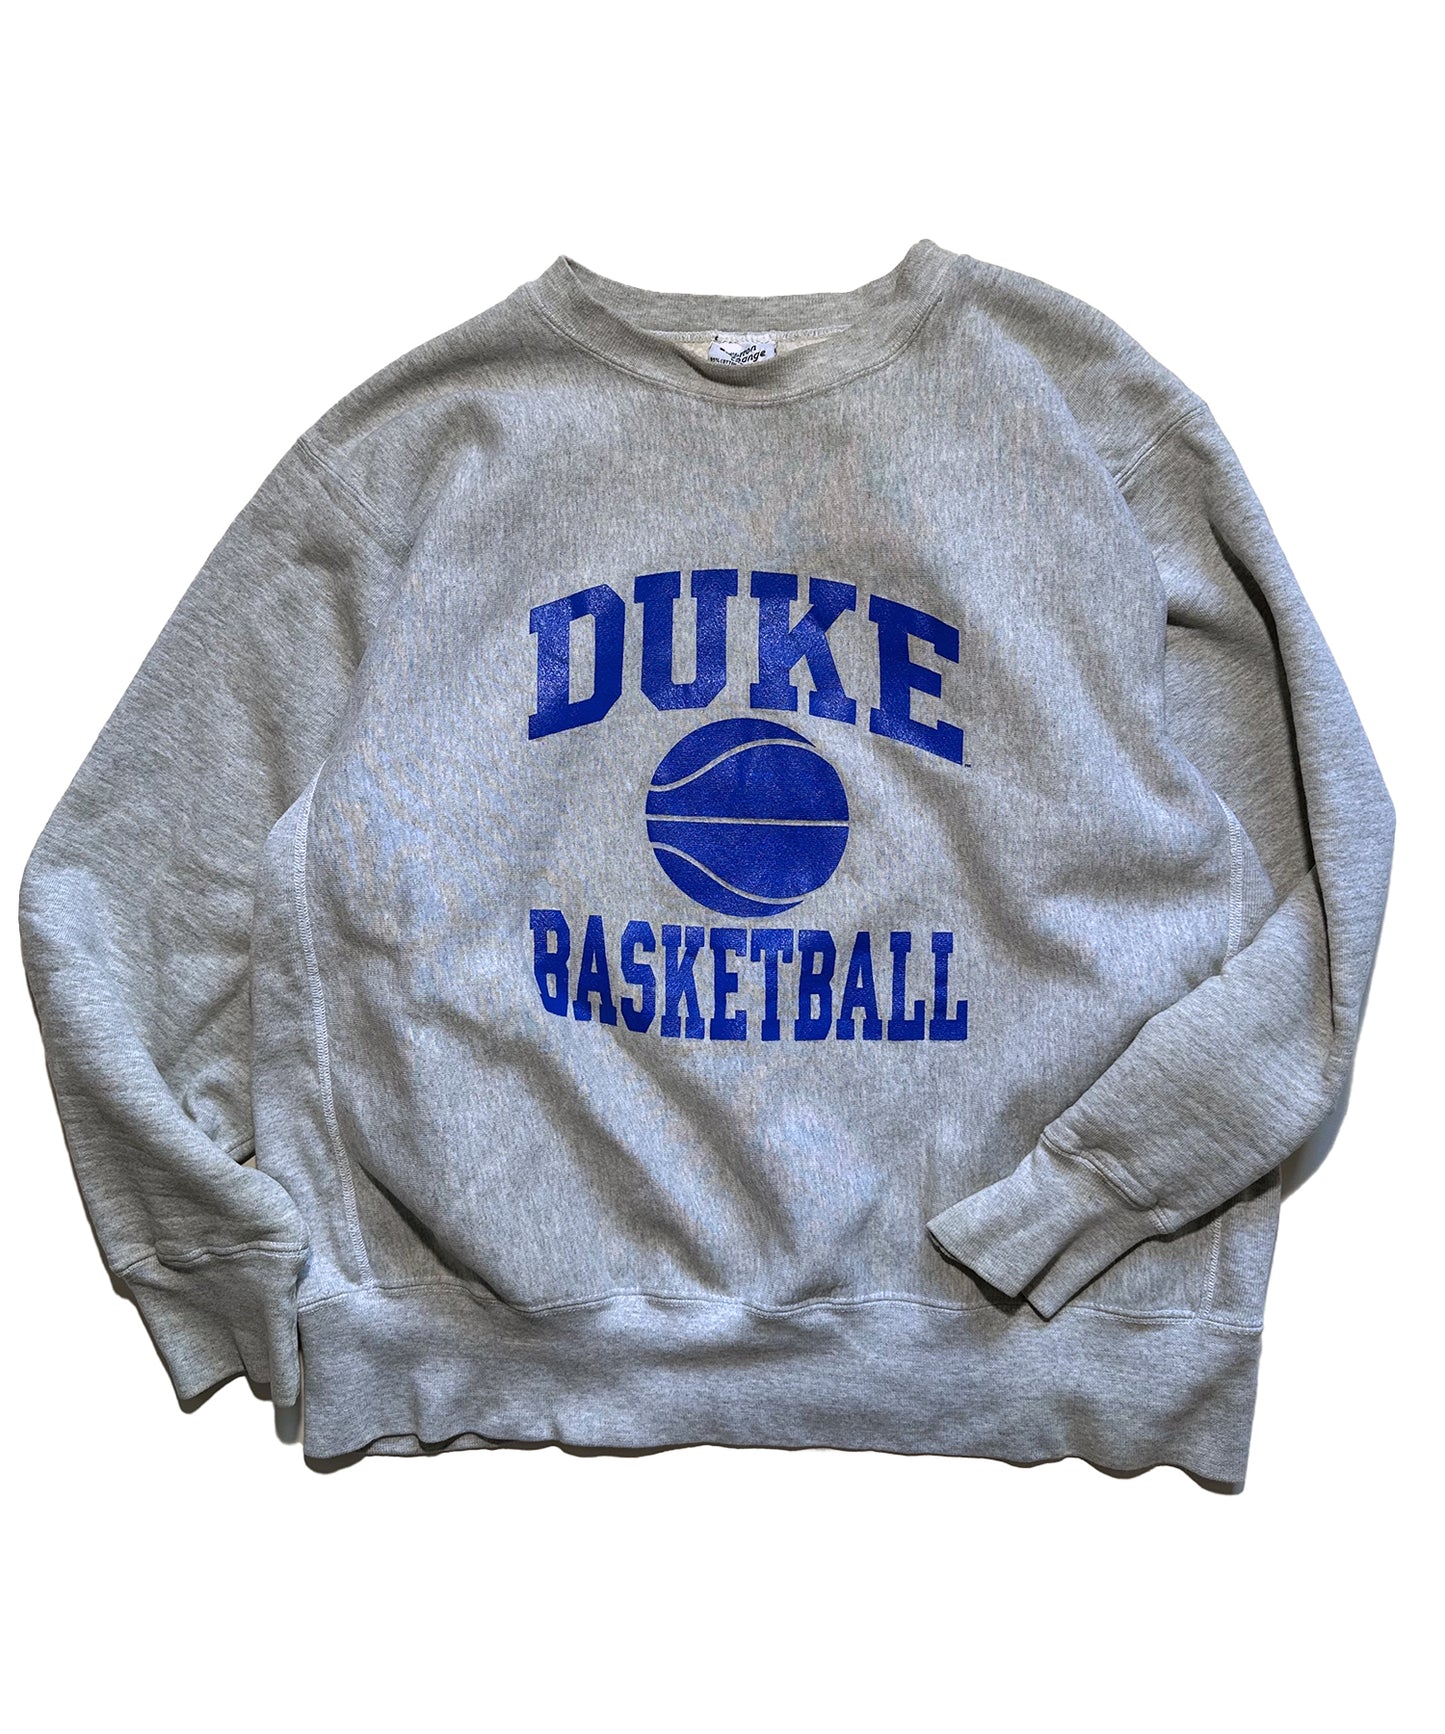 Vintage Duke Basketball Sweater (Large)